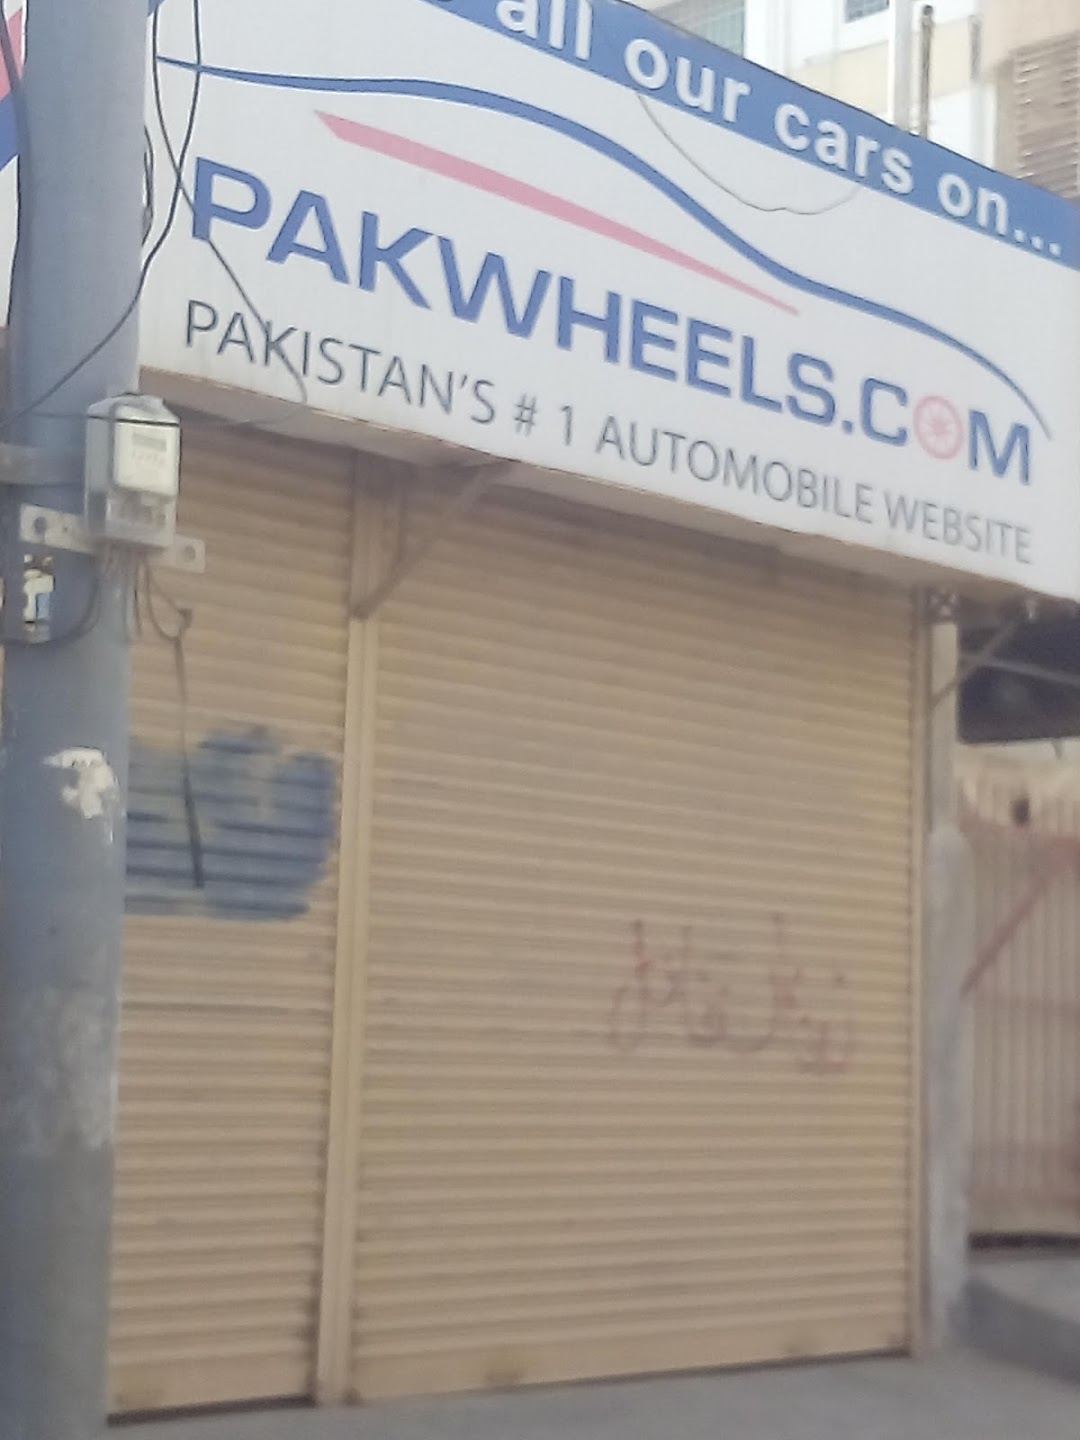 Pak Wheels.com